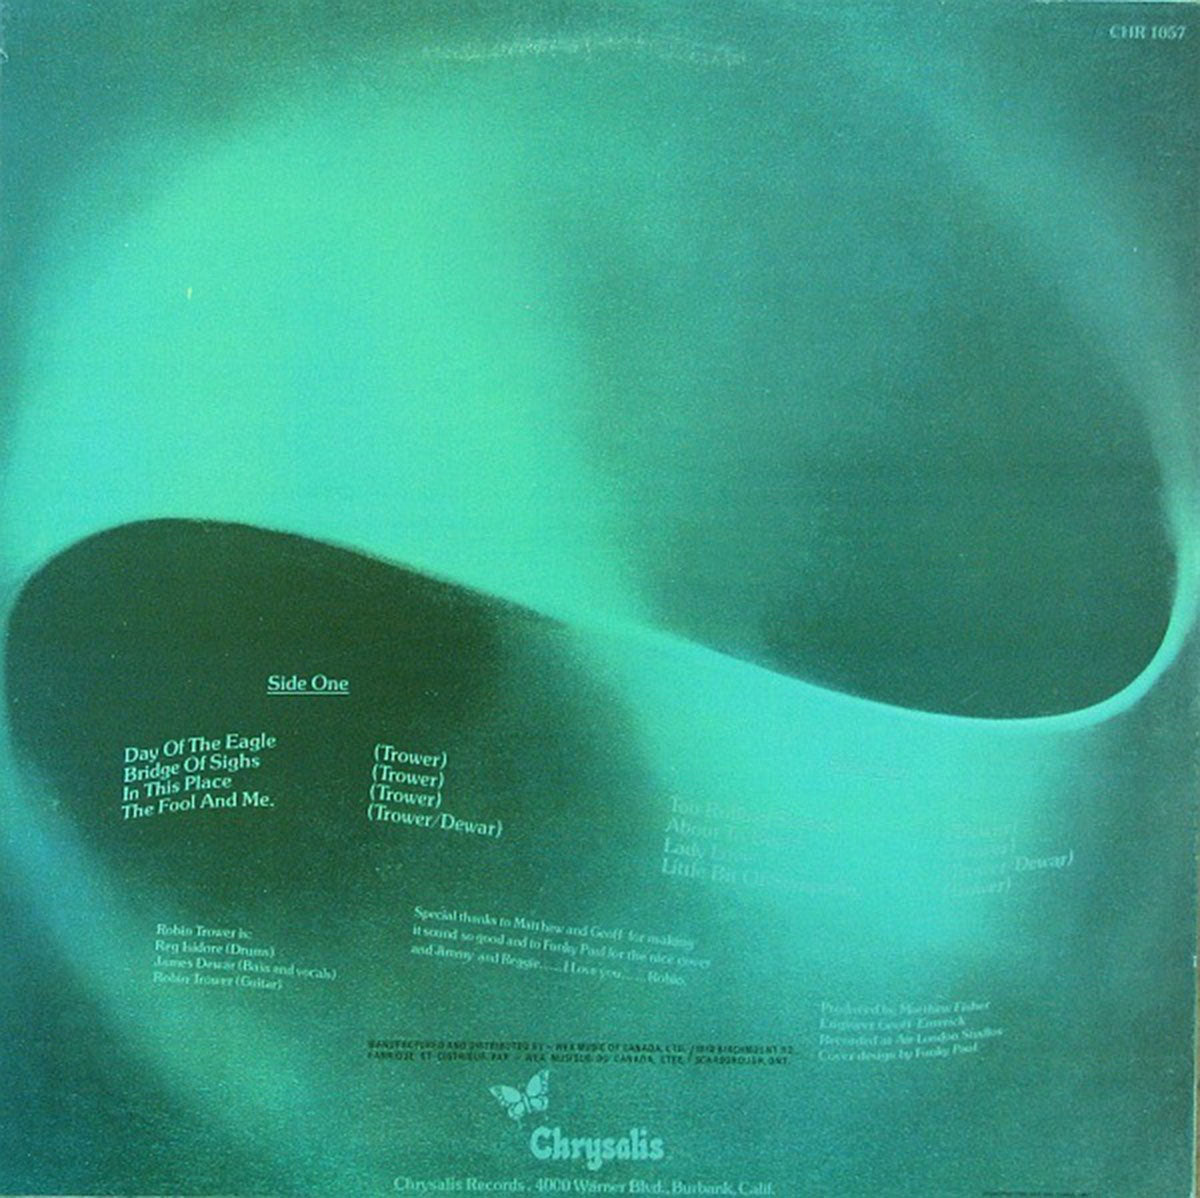 Robin Trower – Bridge Of Sighs - 1974